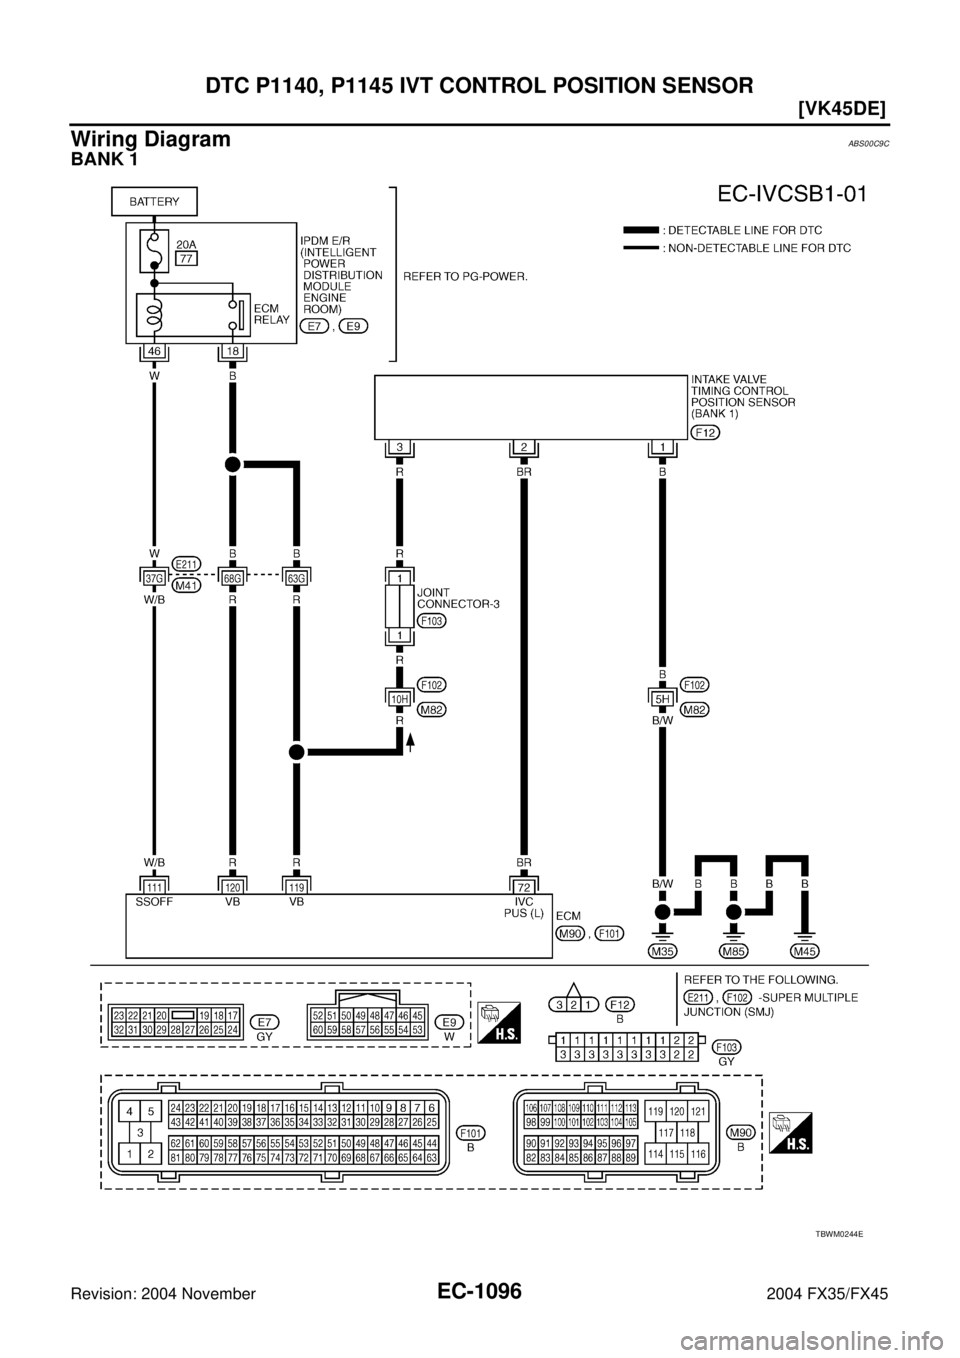 INFINITI FX35 2004  Service Manual EC-1096
[VK45DE]
DTC P1140, P1145 IVT CONTROL POSITION SENSOR
Revision: 2004 November 2004 FX35/FX45
Wiring DiagramABS00C9C
BANK 1
TBWM0244E 